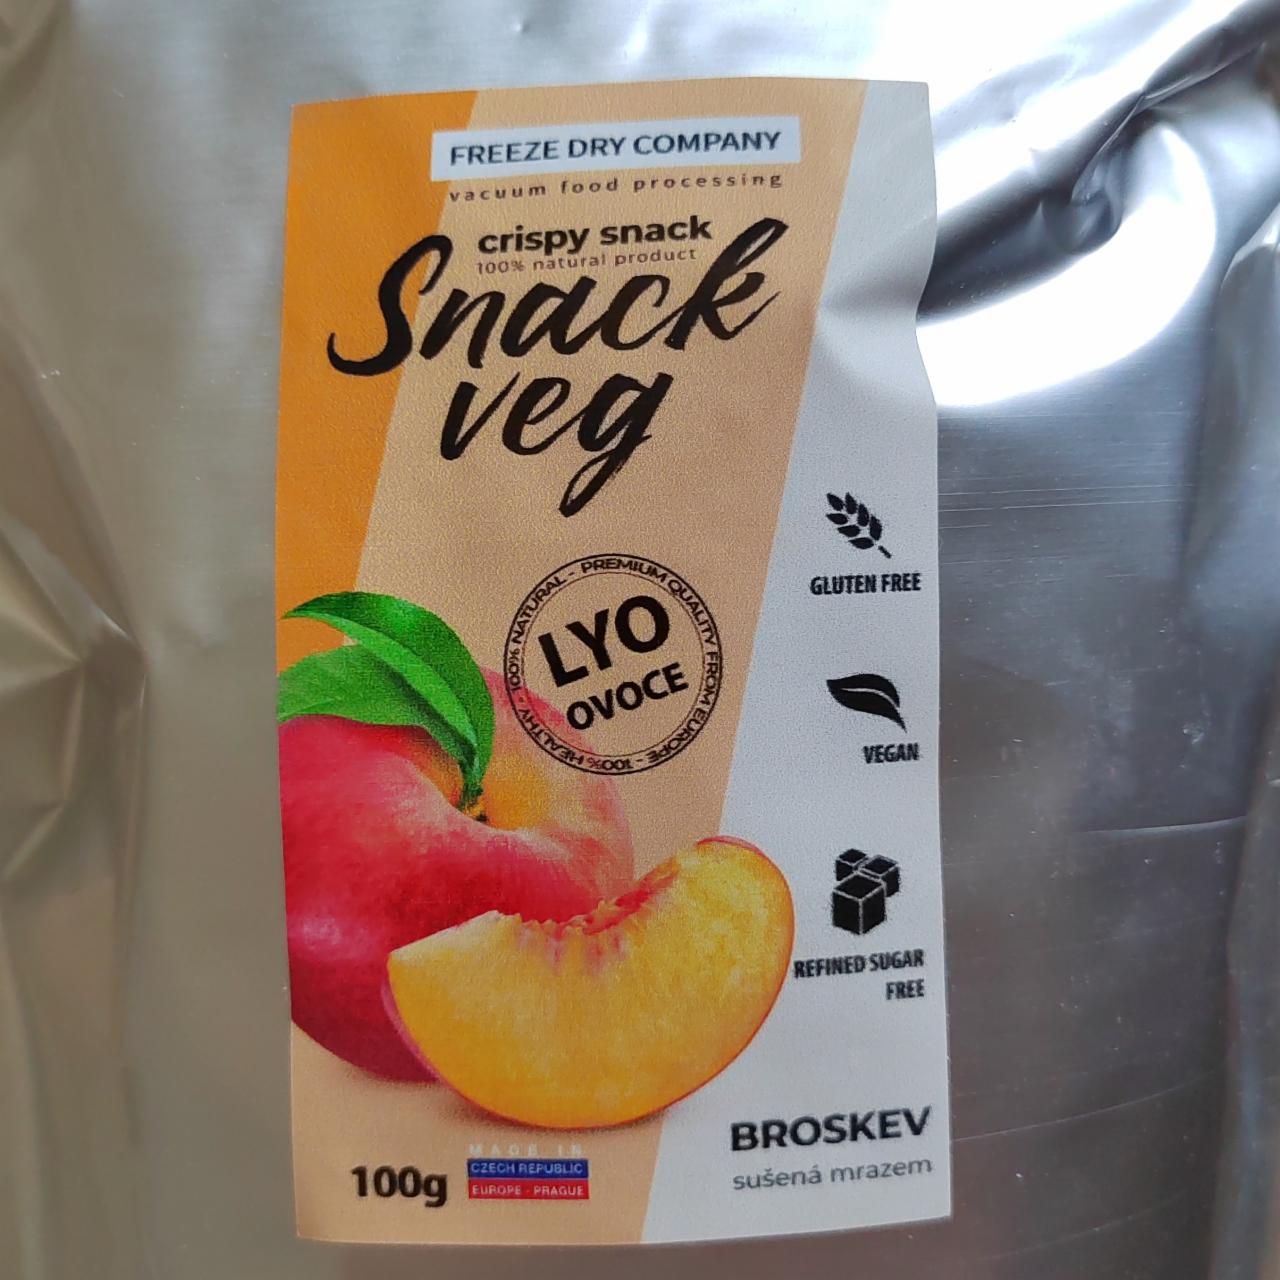 Fotografie - Snack veg broskev Freeze dry company